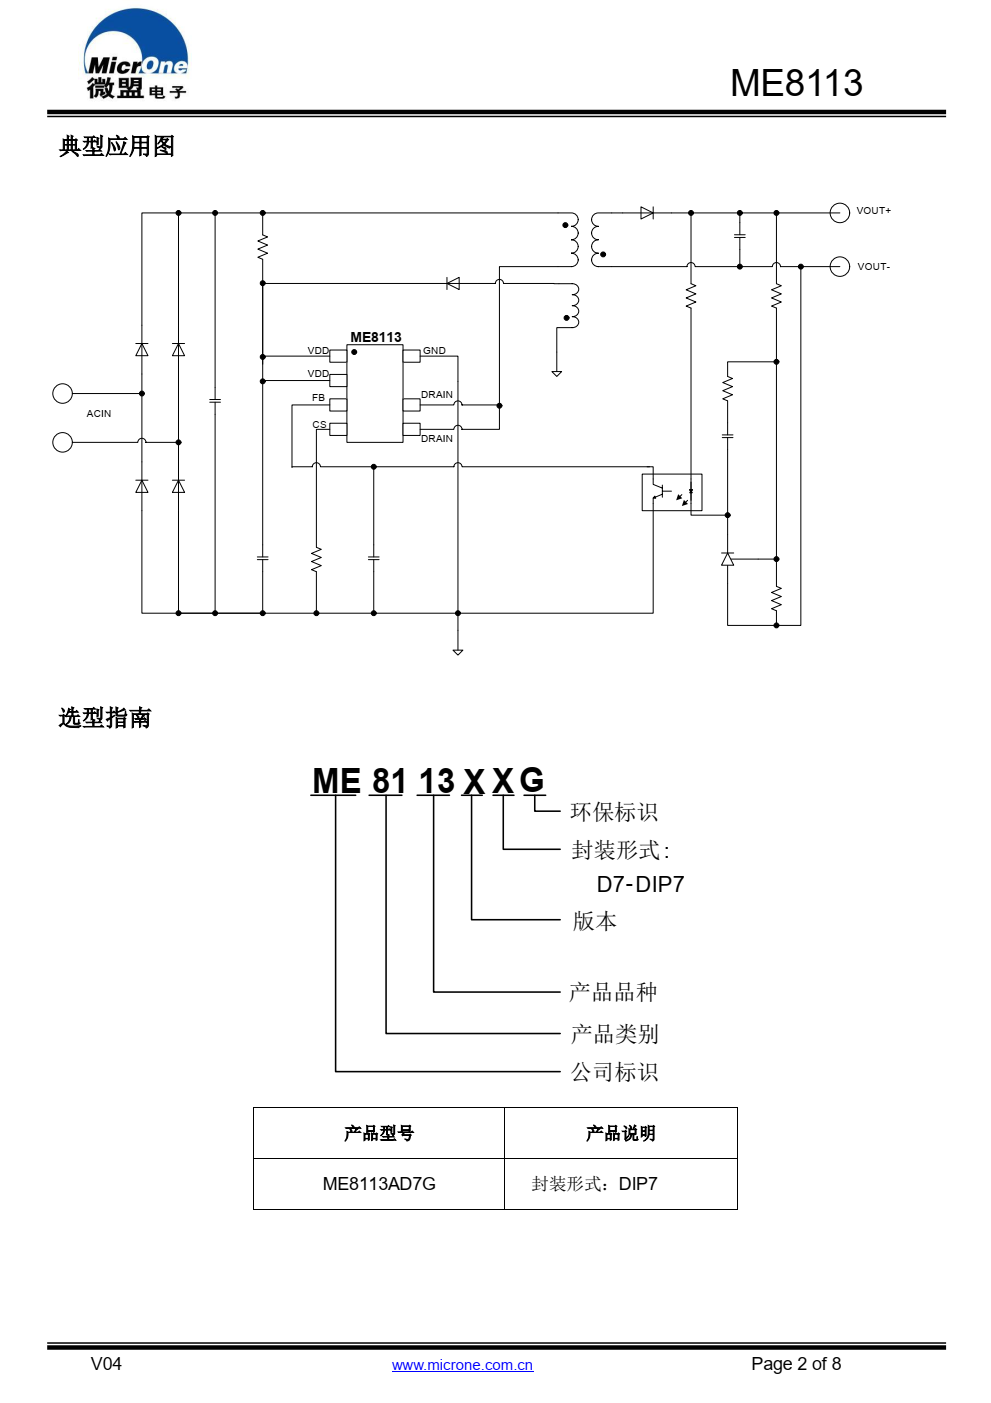 ME8113 是一个高性能电流模式 PWM 控制器，内置 600V/4A 功率 MOSFET